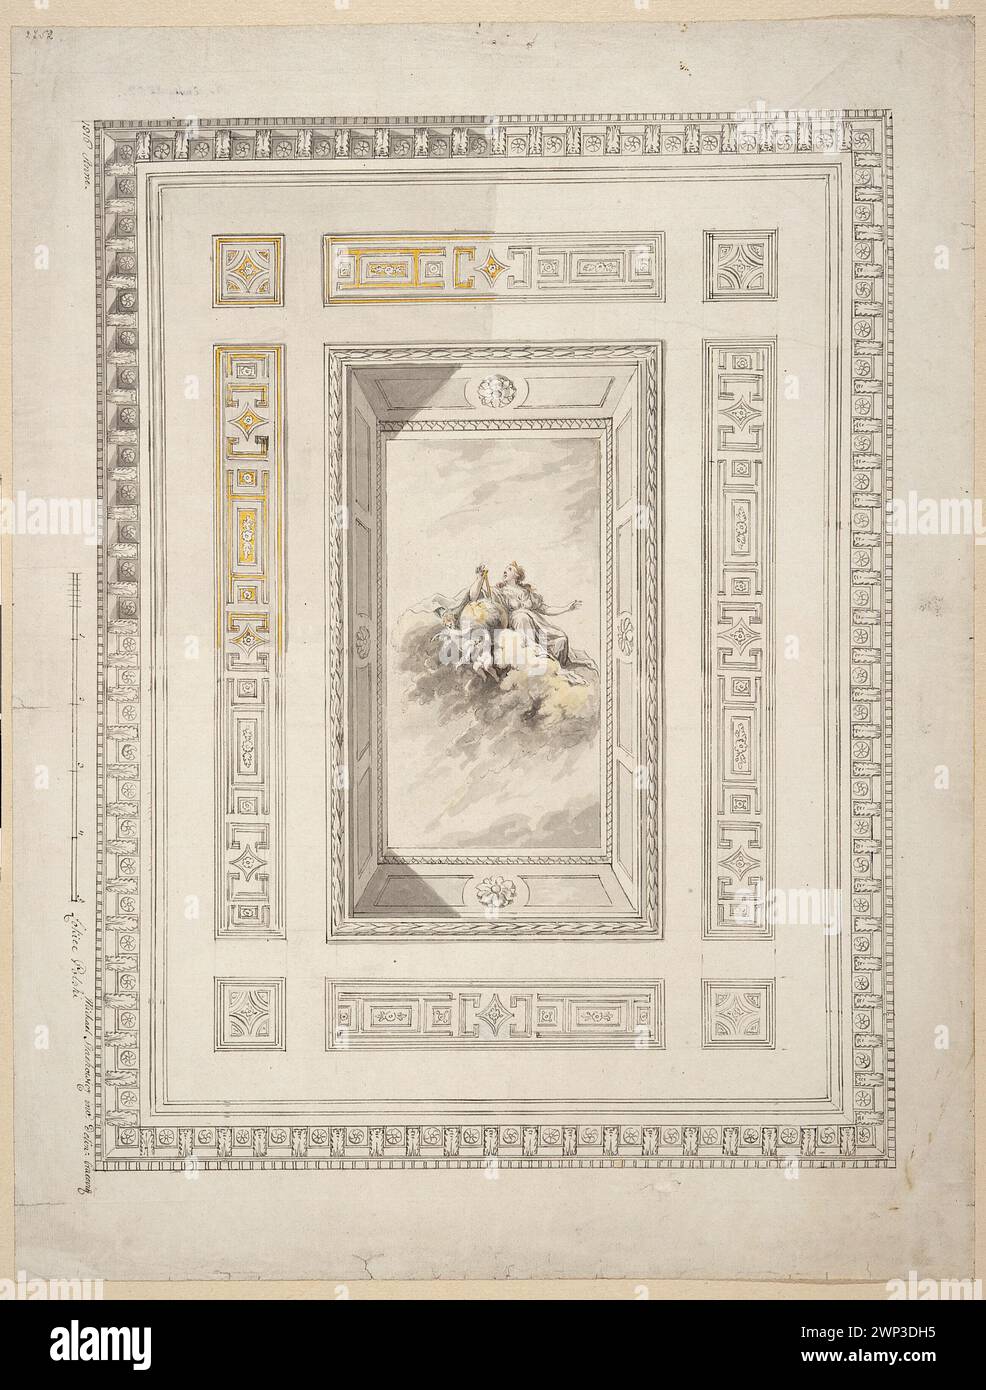 Ceiling ceiling design Urania to the monarchs hall in the episcopal panel in Krakow; Stachowicz, Micha (1768-1825); 1816 (1816-00-00-1816-00-00);Kraków (Lesser Poland Voivodeship), Biskupi Palace (Kraków), Trojanowska, Ludmiła (18 ..-19 ..), Trojanowska, Ludmiła (18 ..- 19 ..)-collection, Trojanowski, Edward (1873-1930), Trojanowski, Edward (1873-1930) - collections, urania (mitol.), Dar (provenance), illusionism, palaces (archite.), Plafons (architect.), Polichrome, Poland (culture), projects, decoration designs, plafond designs , polychrome projects, Putta (iconogr.), Polish drawings Stock Photo